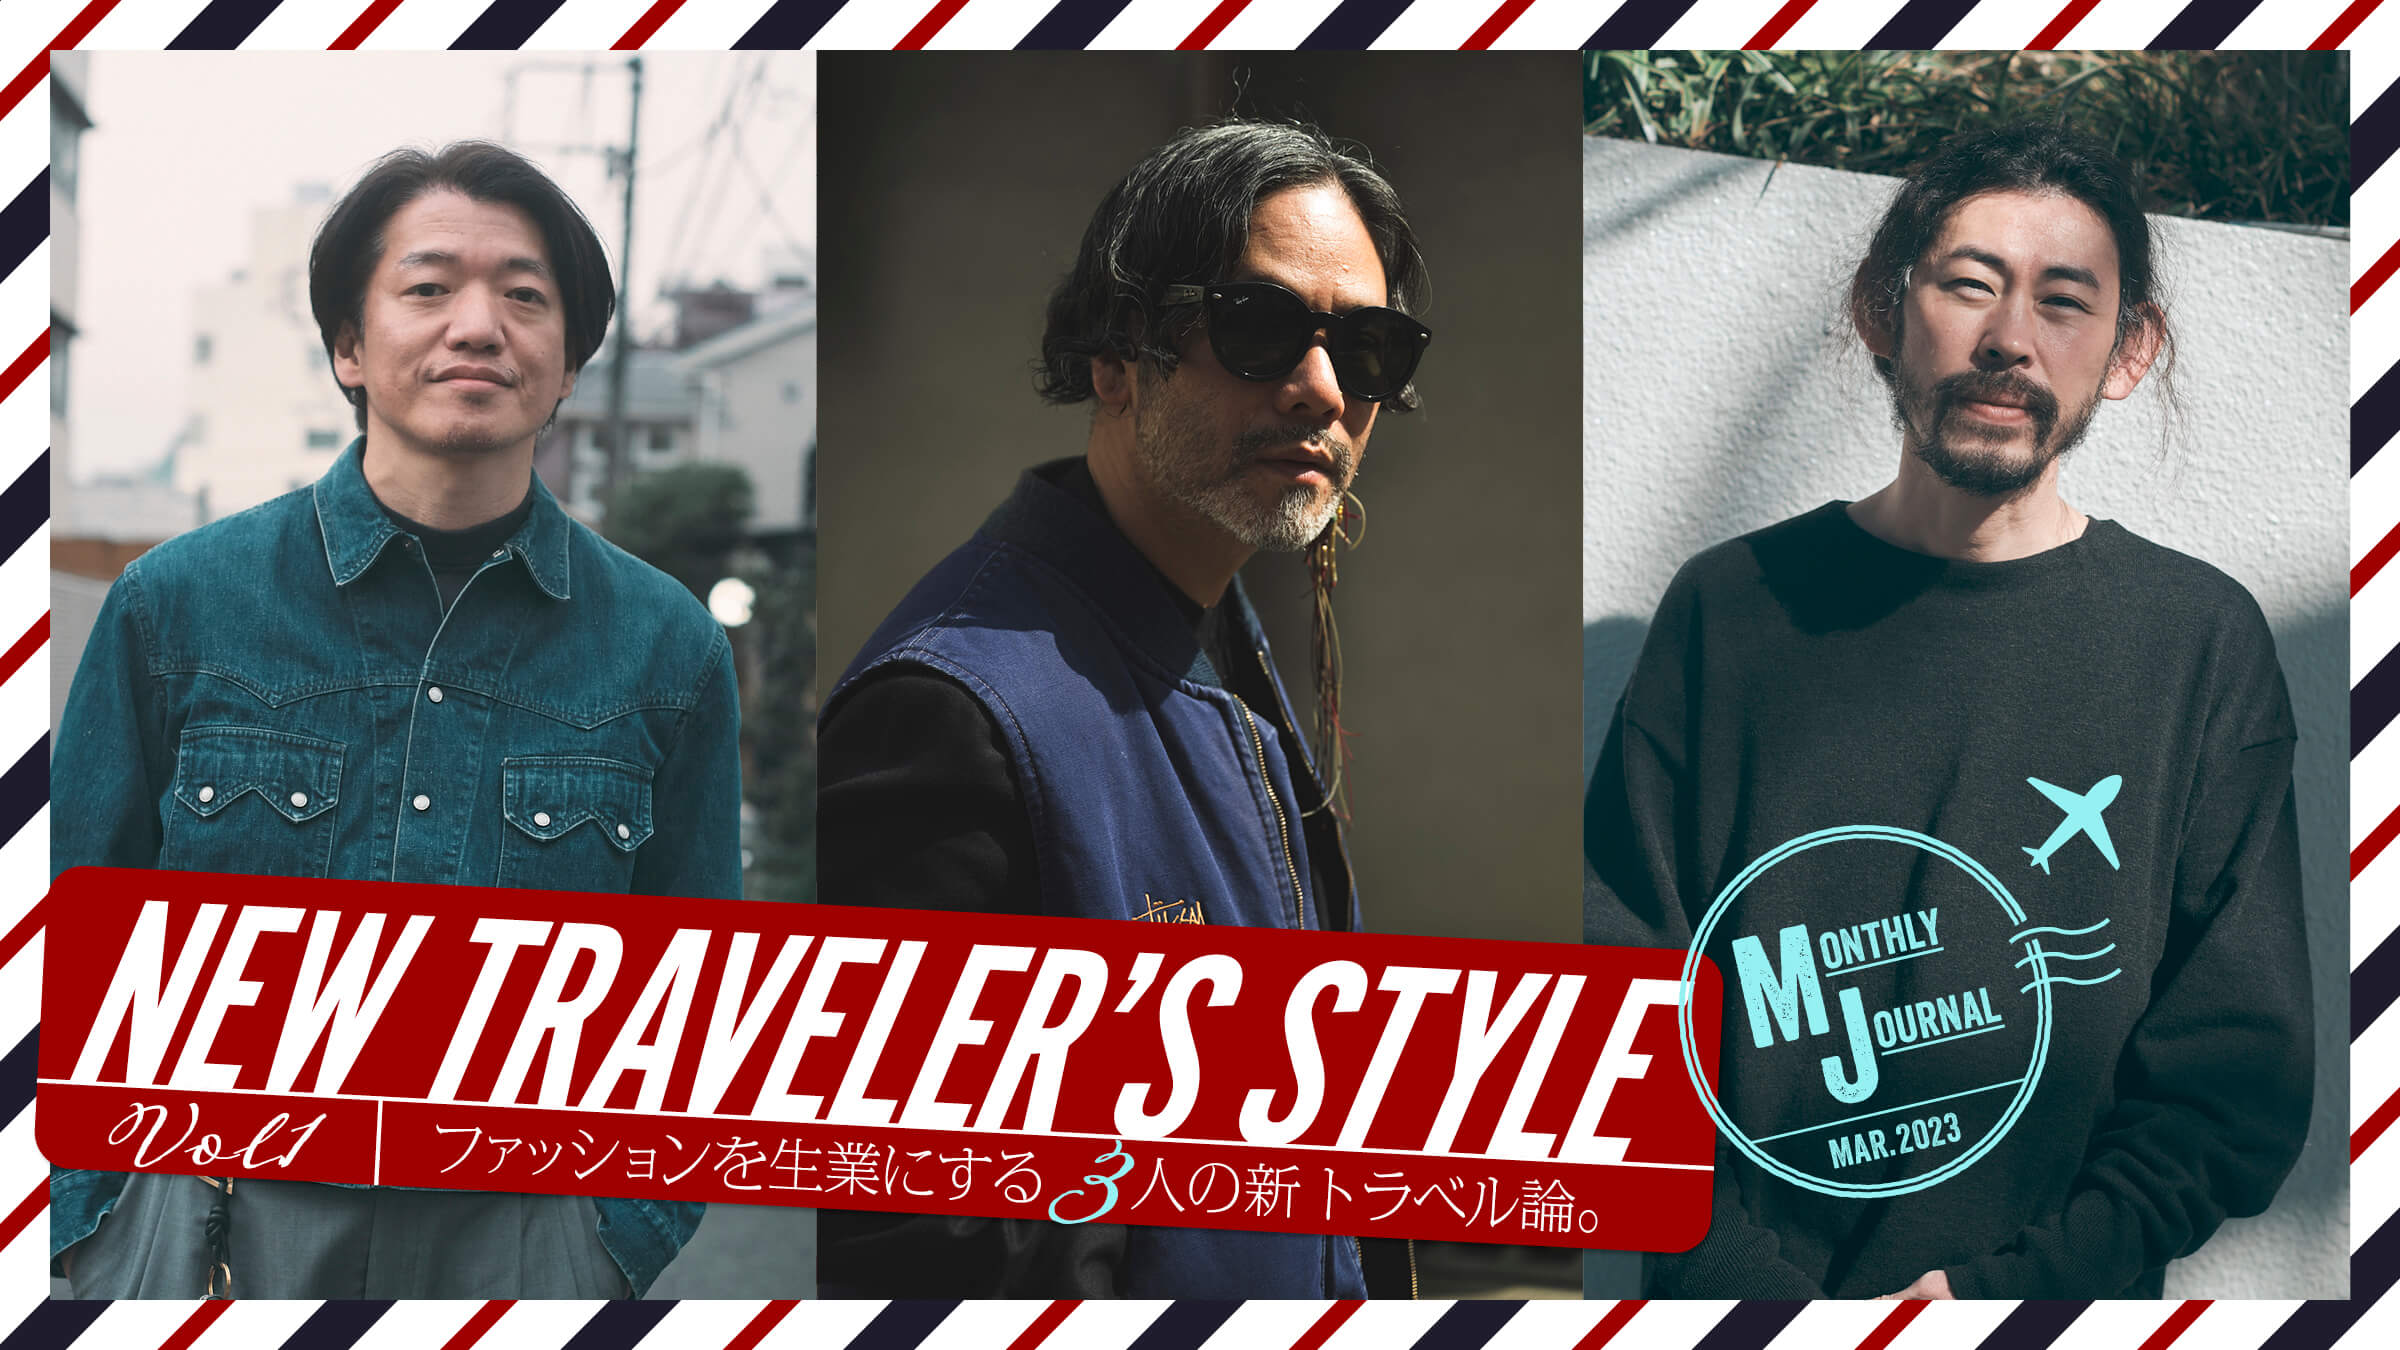 NEW TRAVELER’S  STYLE Vol.01 ファッションを生業にする3人の新トラベル論。